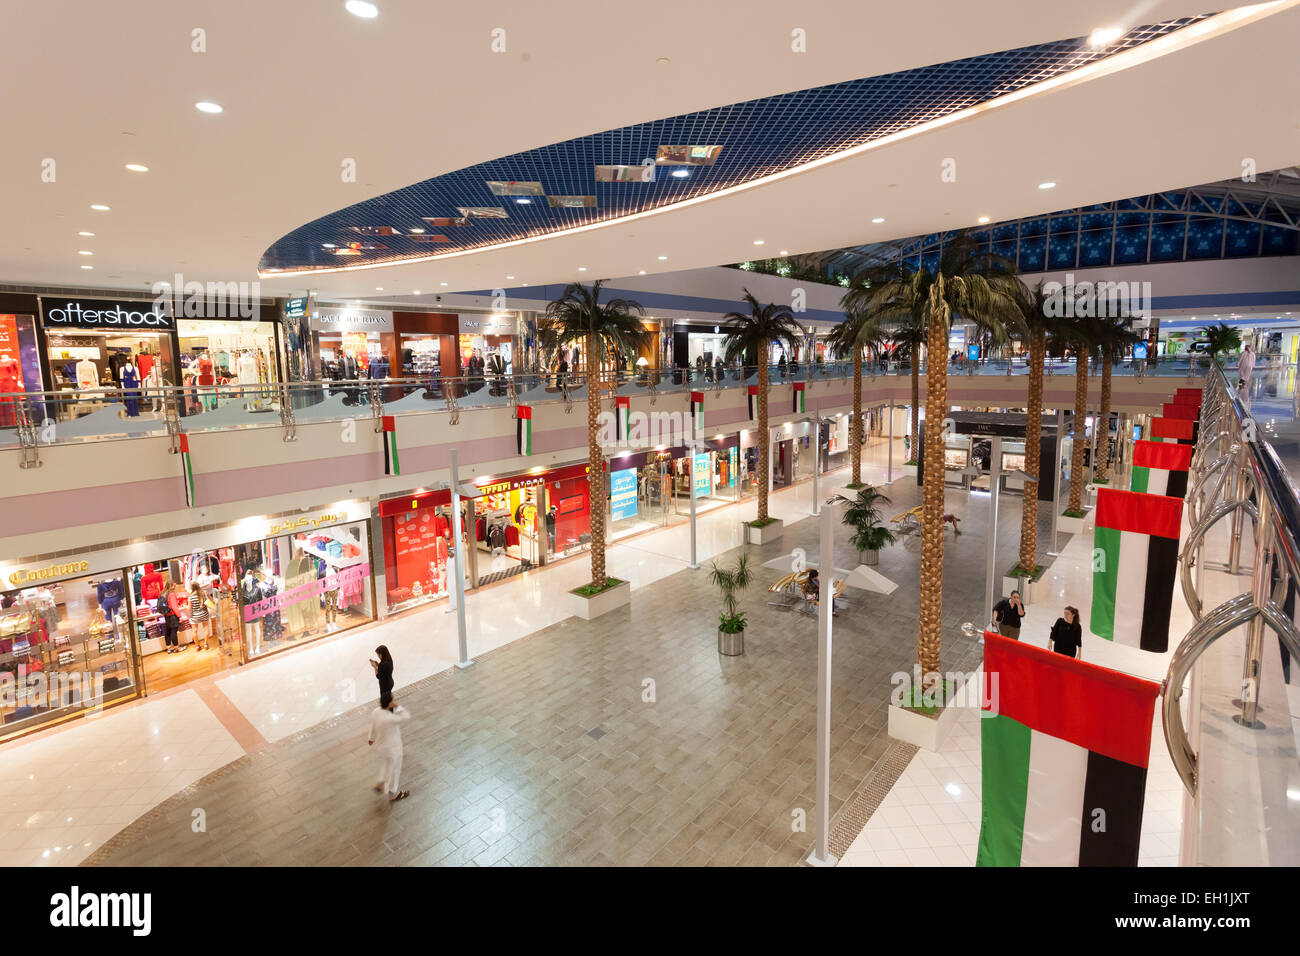 Interior of the Marina Mall in Abu Dhabi. December 21, 2014 in Abu Dhabi, United Arab Emirates Stock Photo